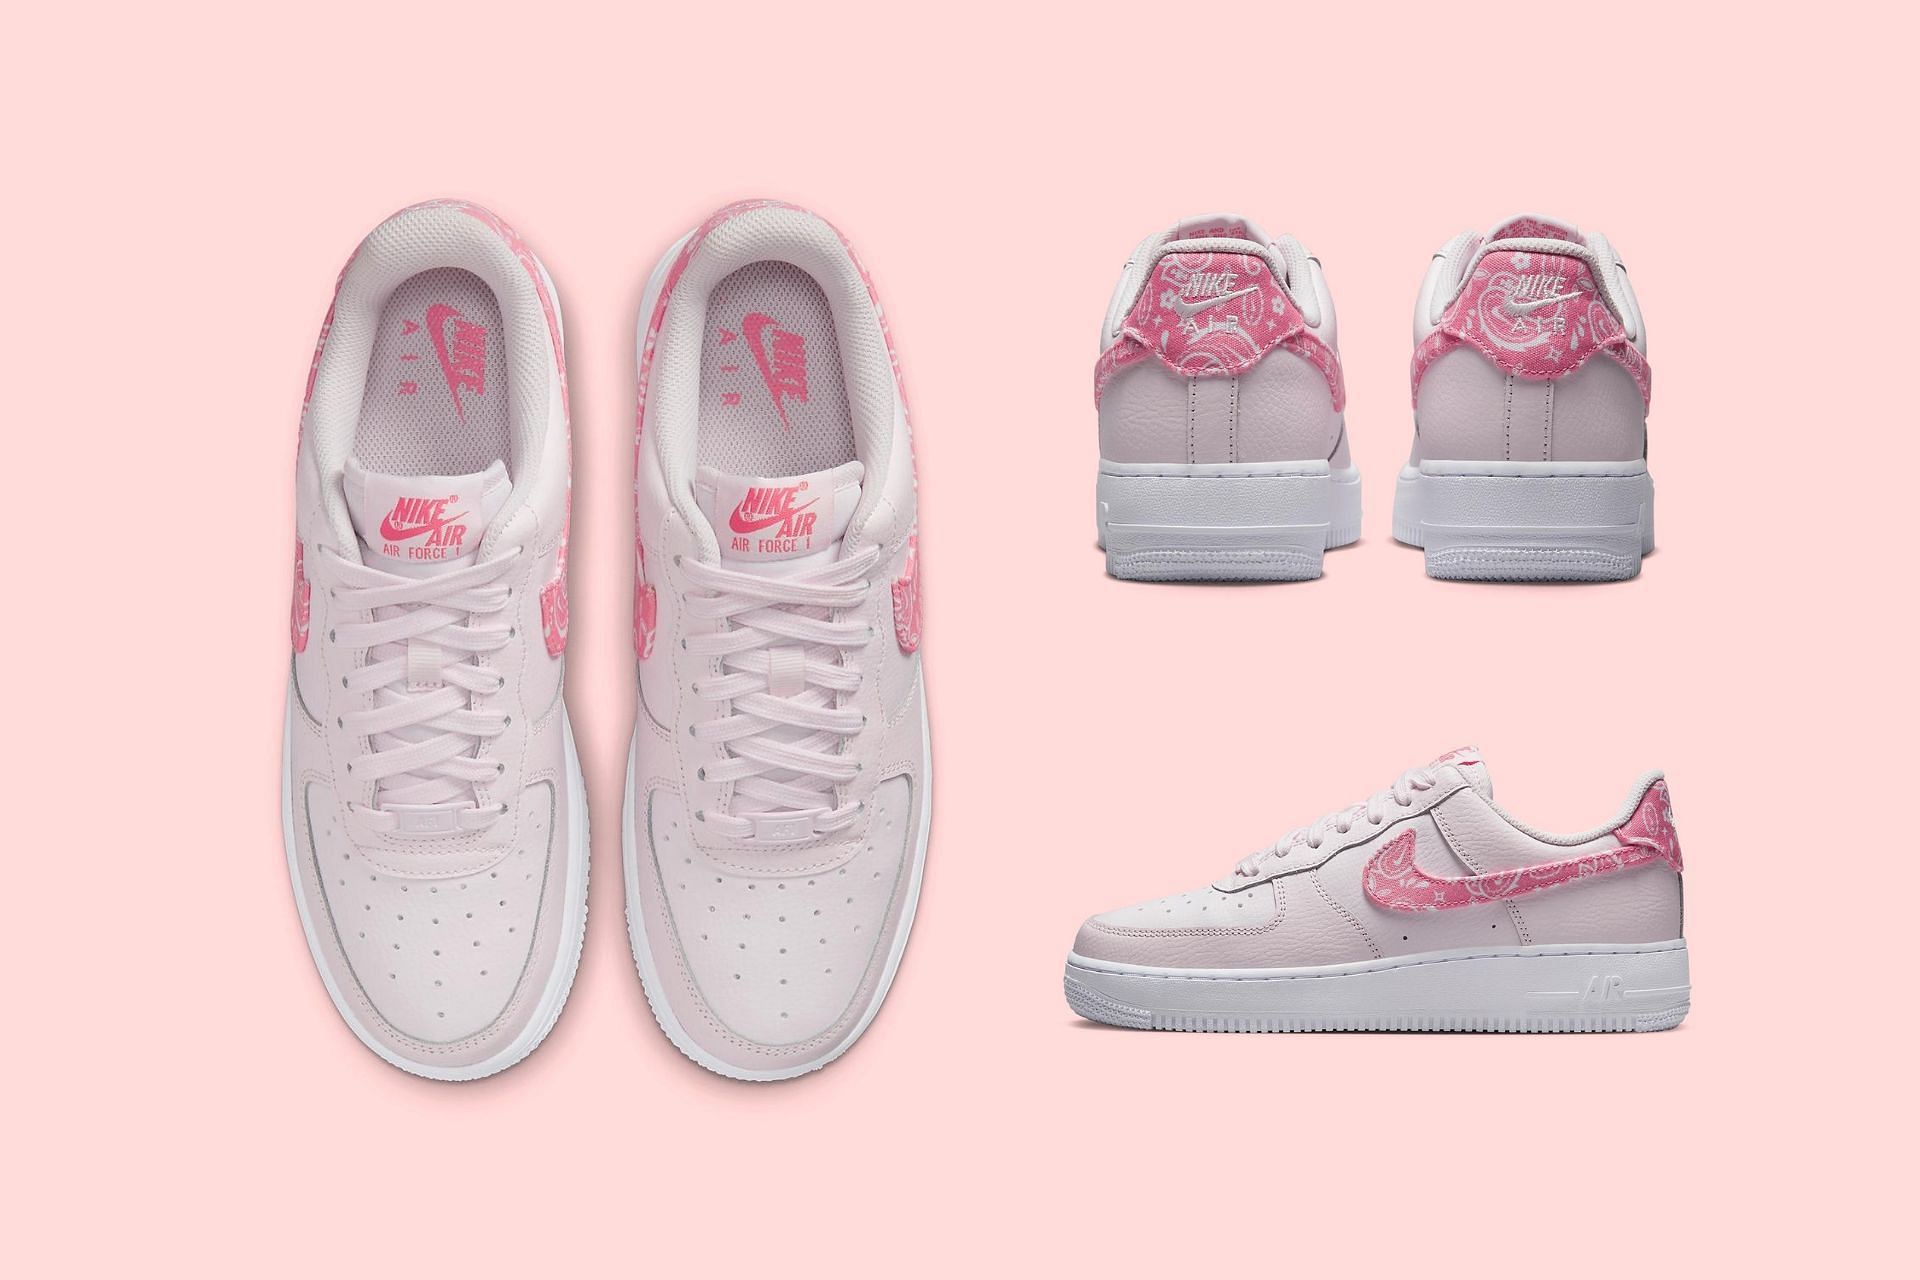 Upcoming Nike Air Force 1 Low Pink Paisley sneaker featuring pearl bandana prints (Image via Sportskeeda)